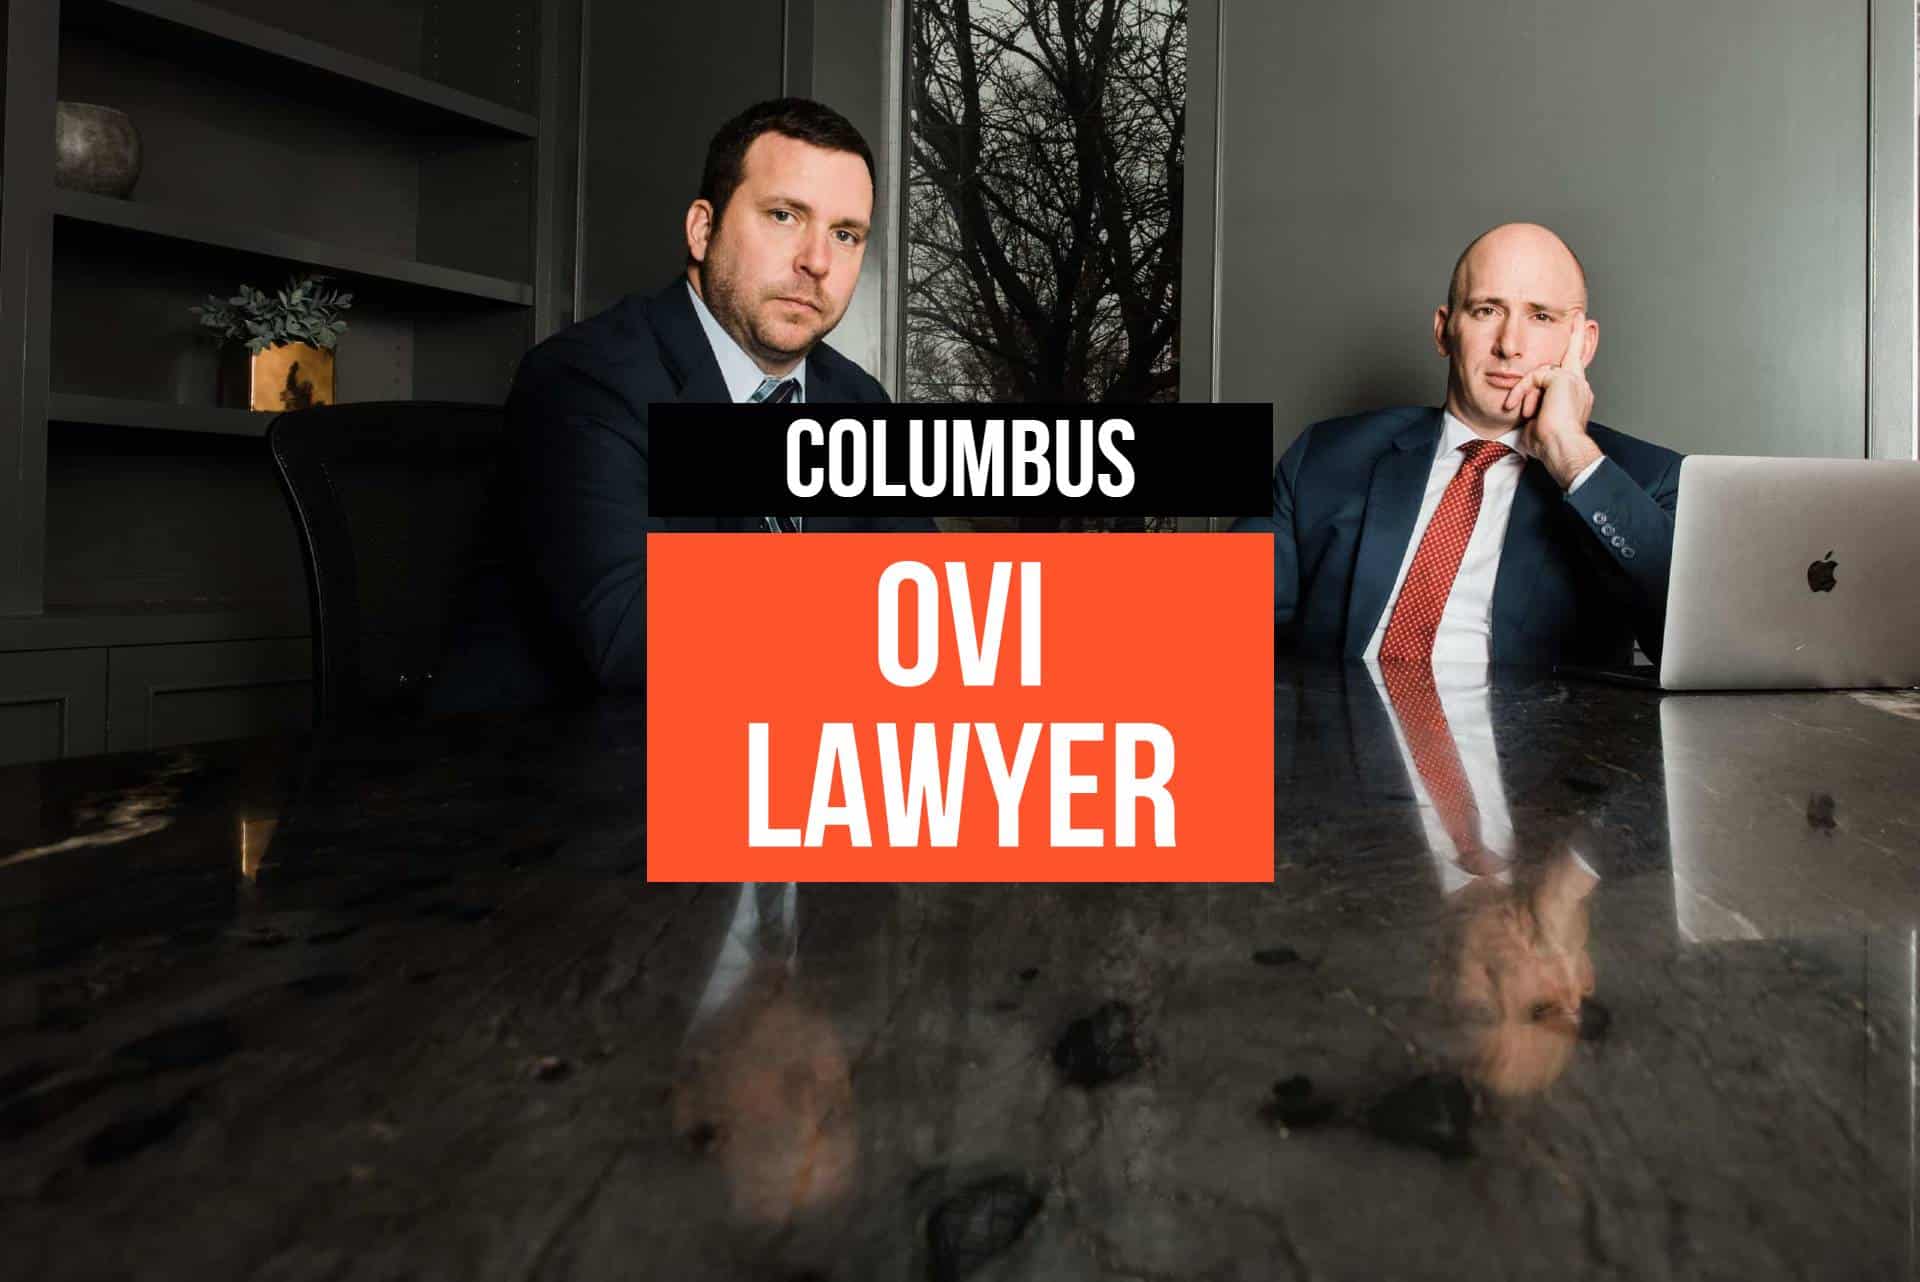 Columbus OVI lawyer